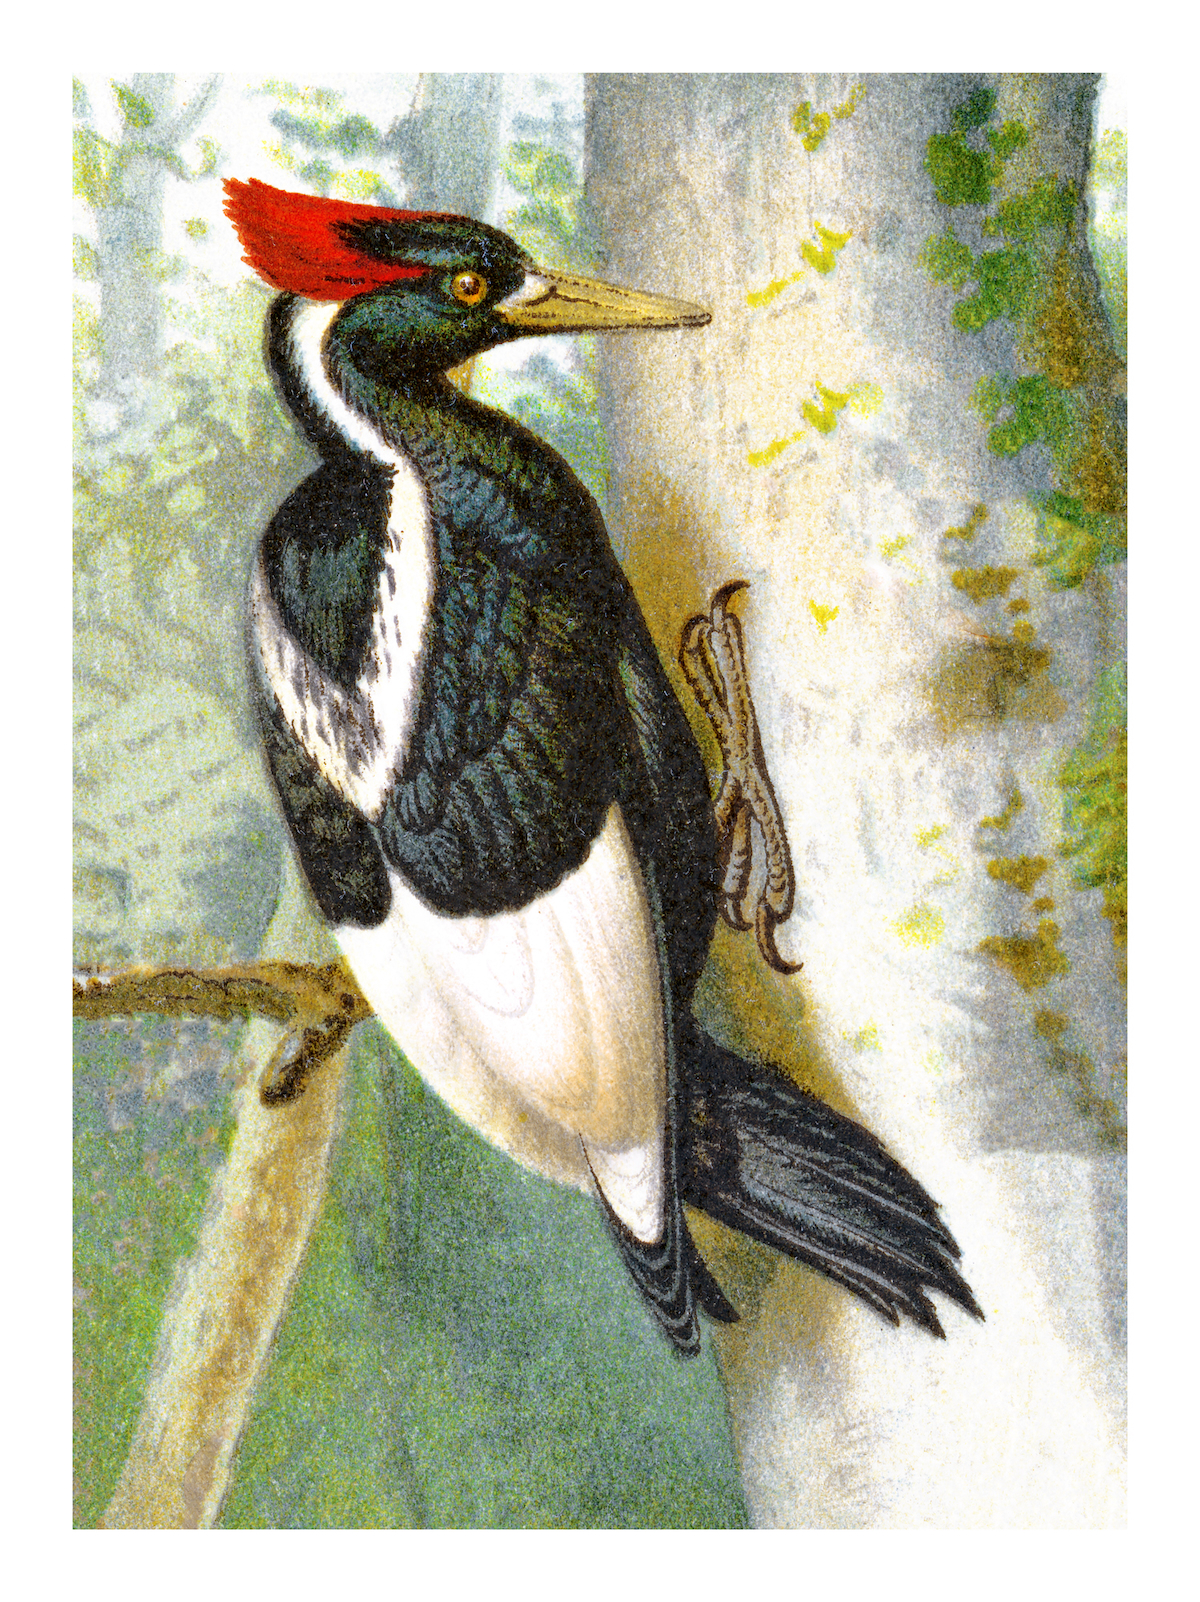 A digitally restored antique illustration of an ivory-billed woodpecker